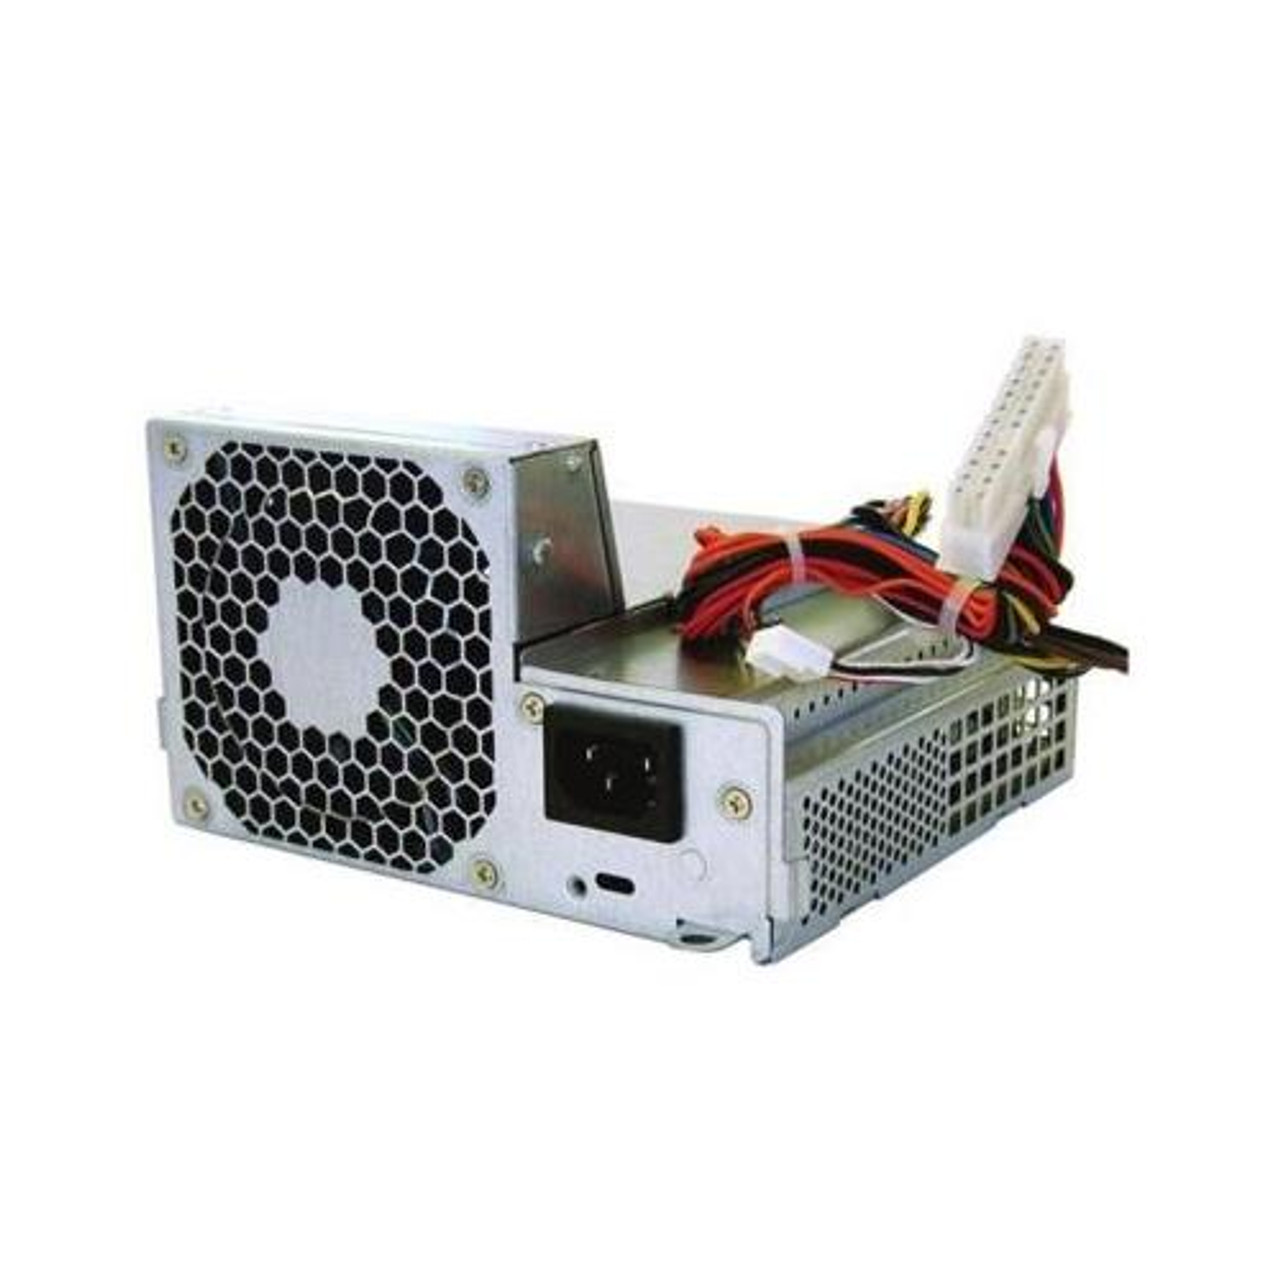 4608 001 Hp 240 Watts Atx Power Supply For Dc5800 Sff Desktop System